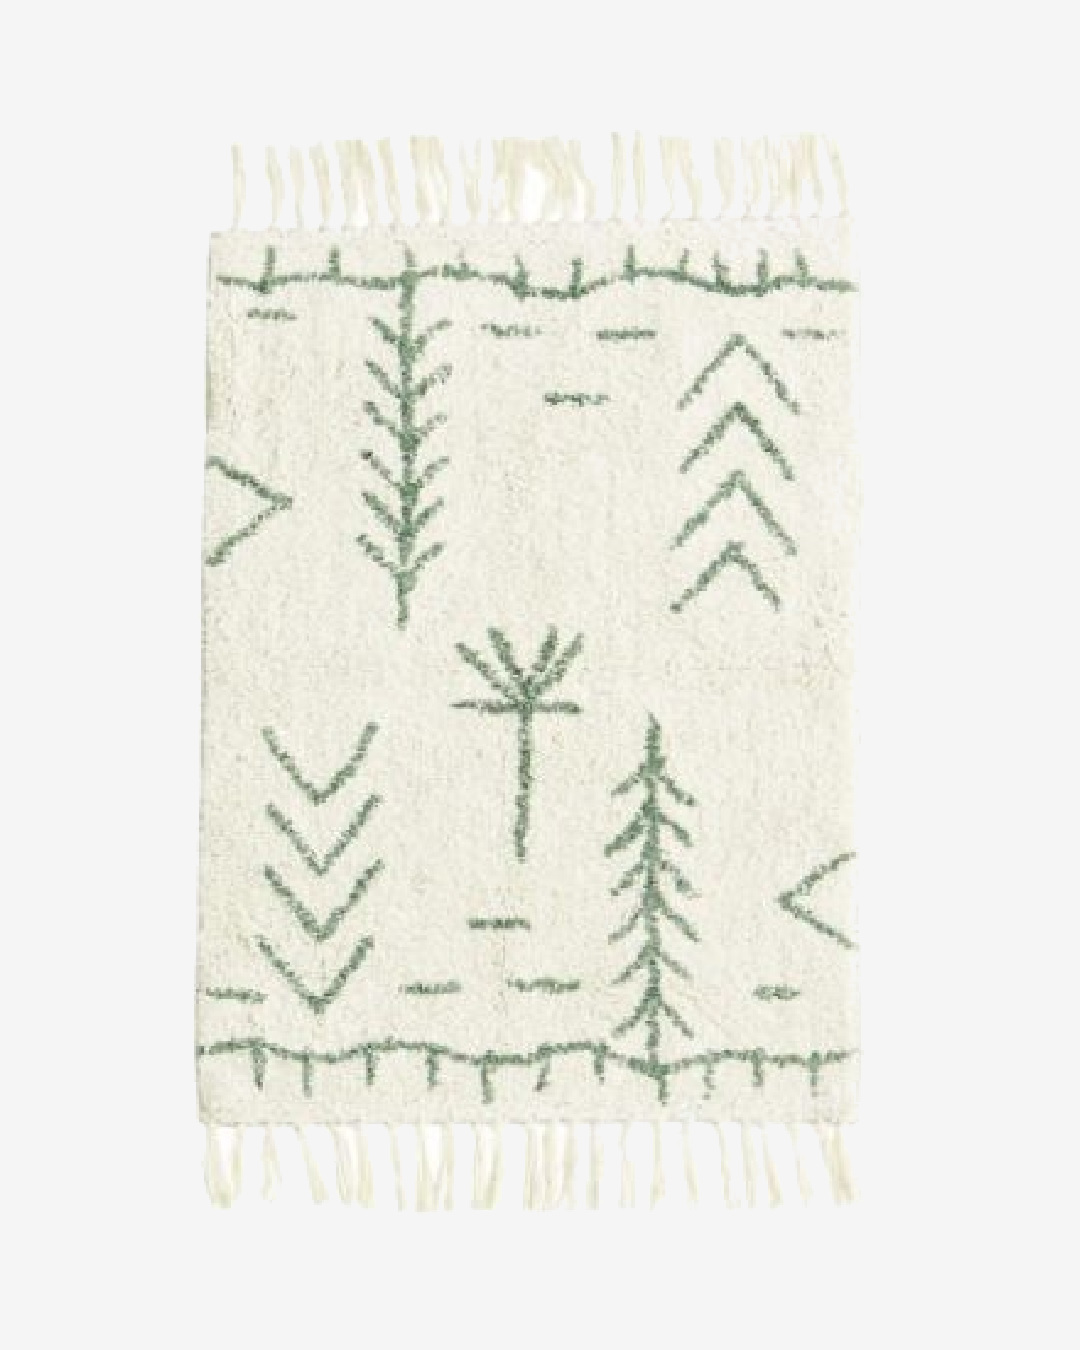 Tuffed cotton bath mat ivory with tassels and green stick tree pattern